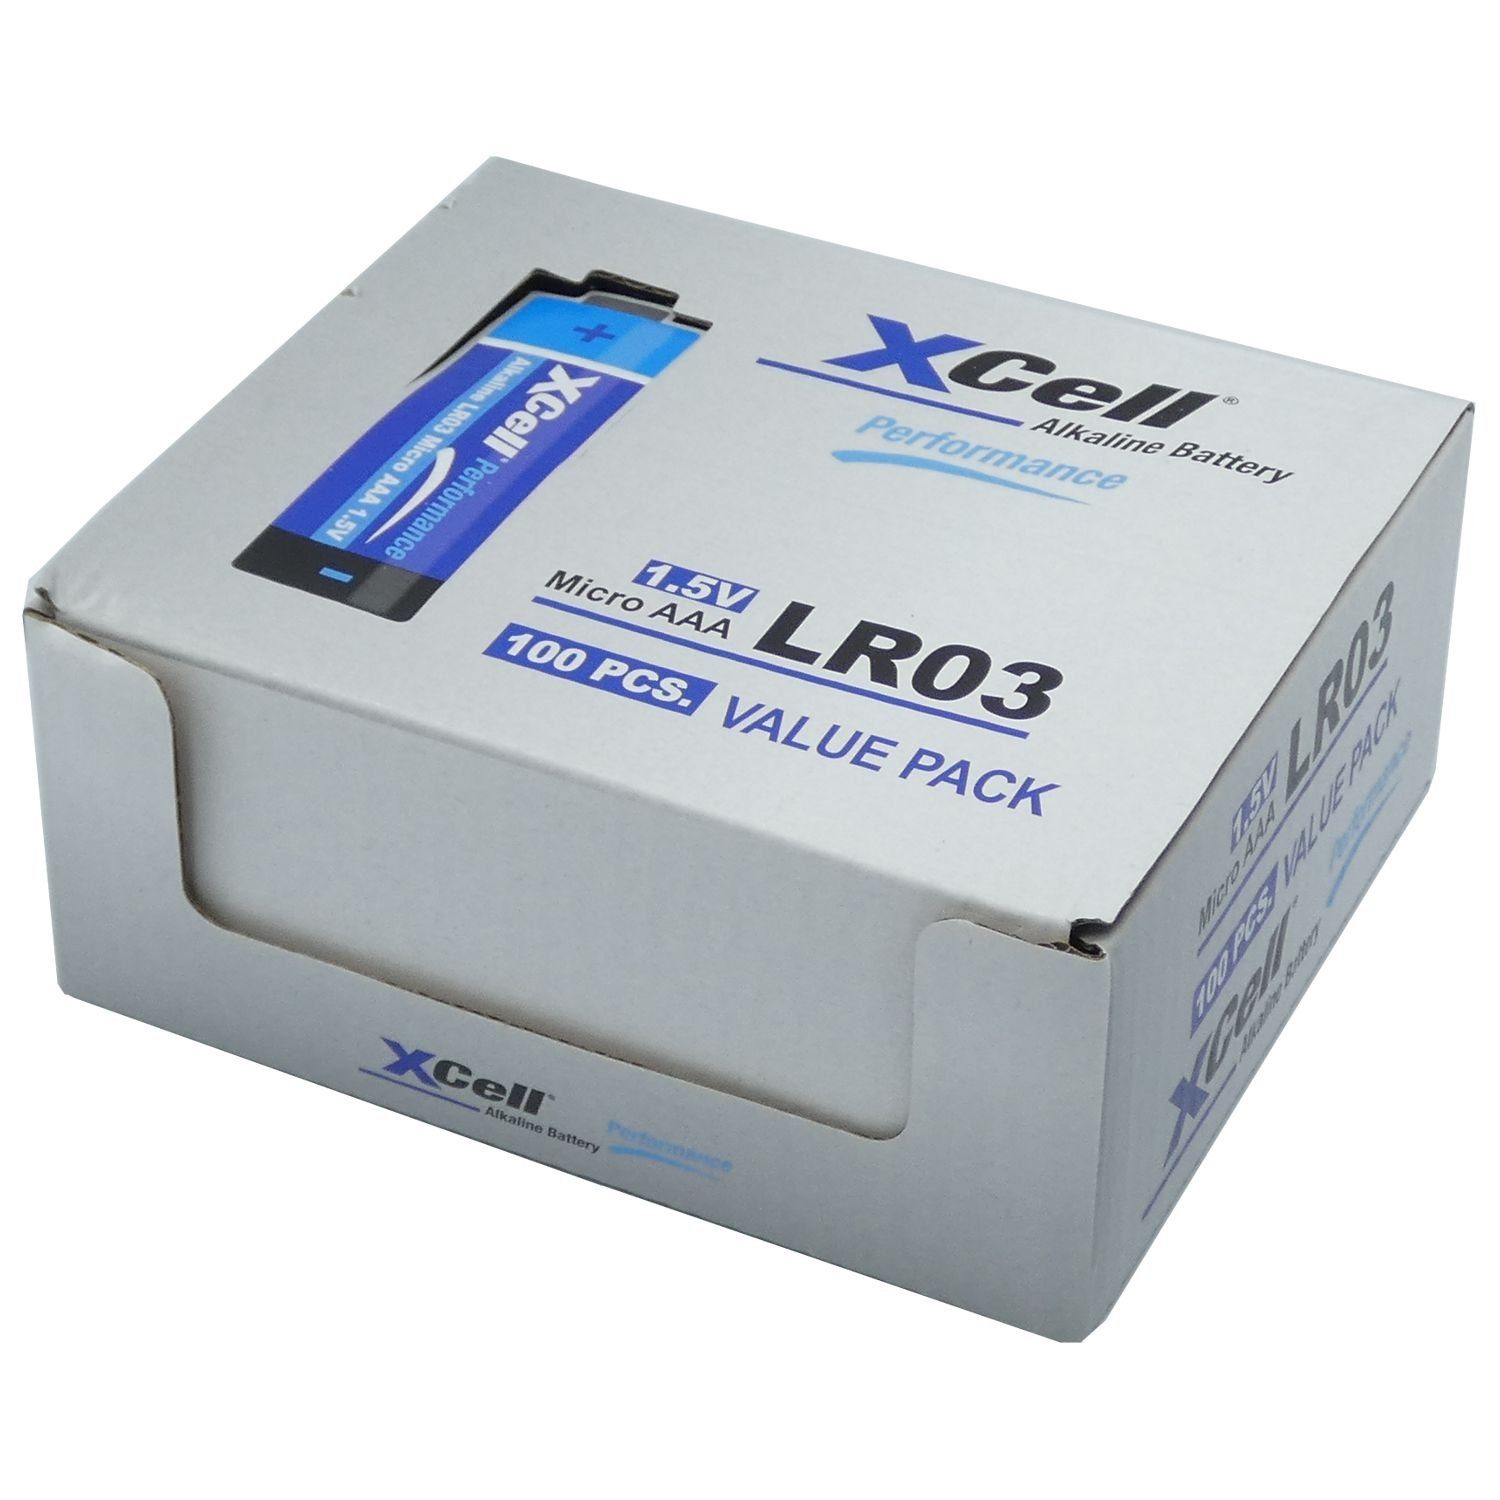 Batterie, Volt (1,5 V) Alkaline LR03 XCell 100er Box Performance XCell Micro